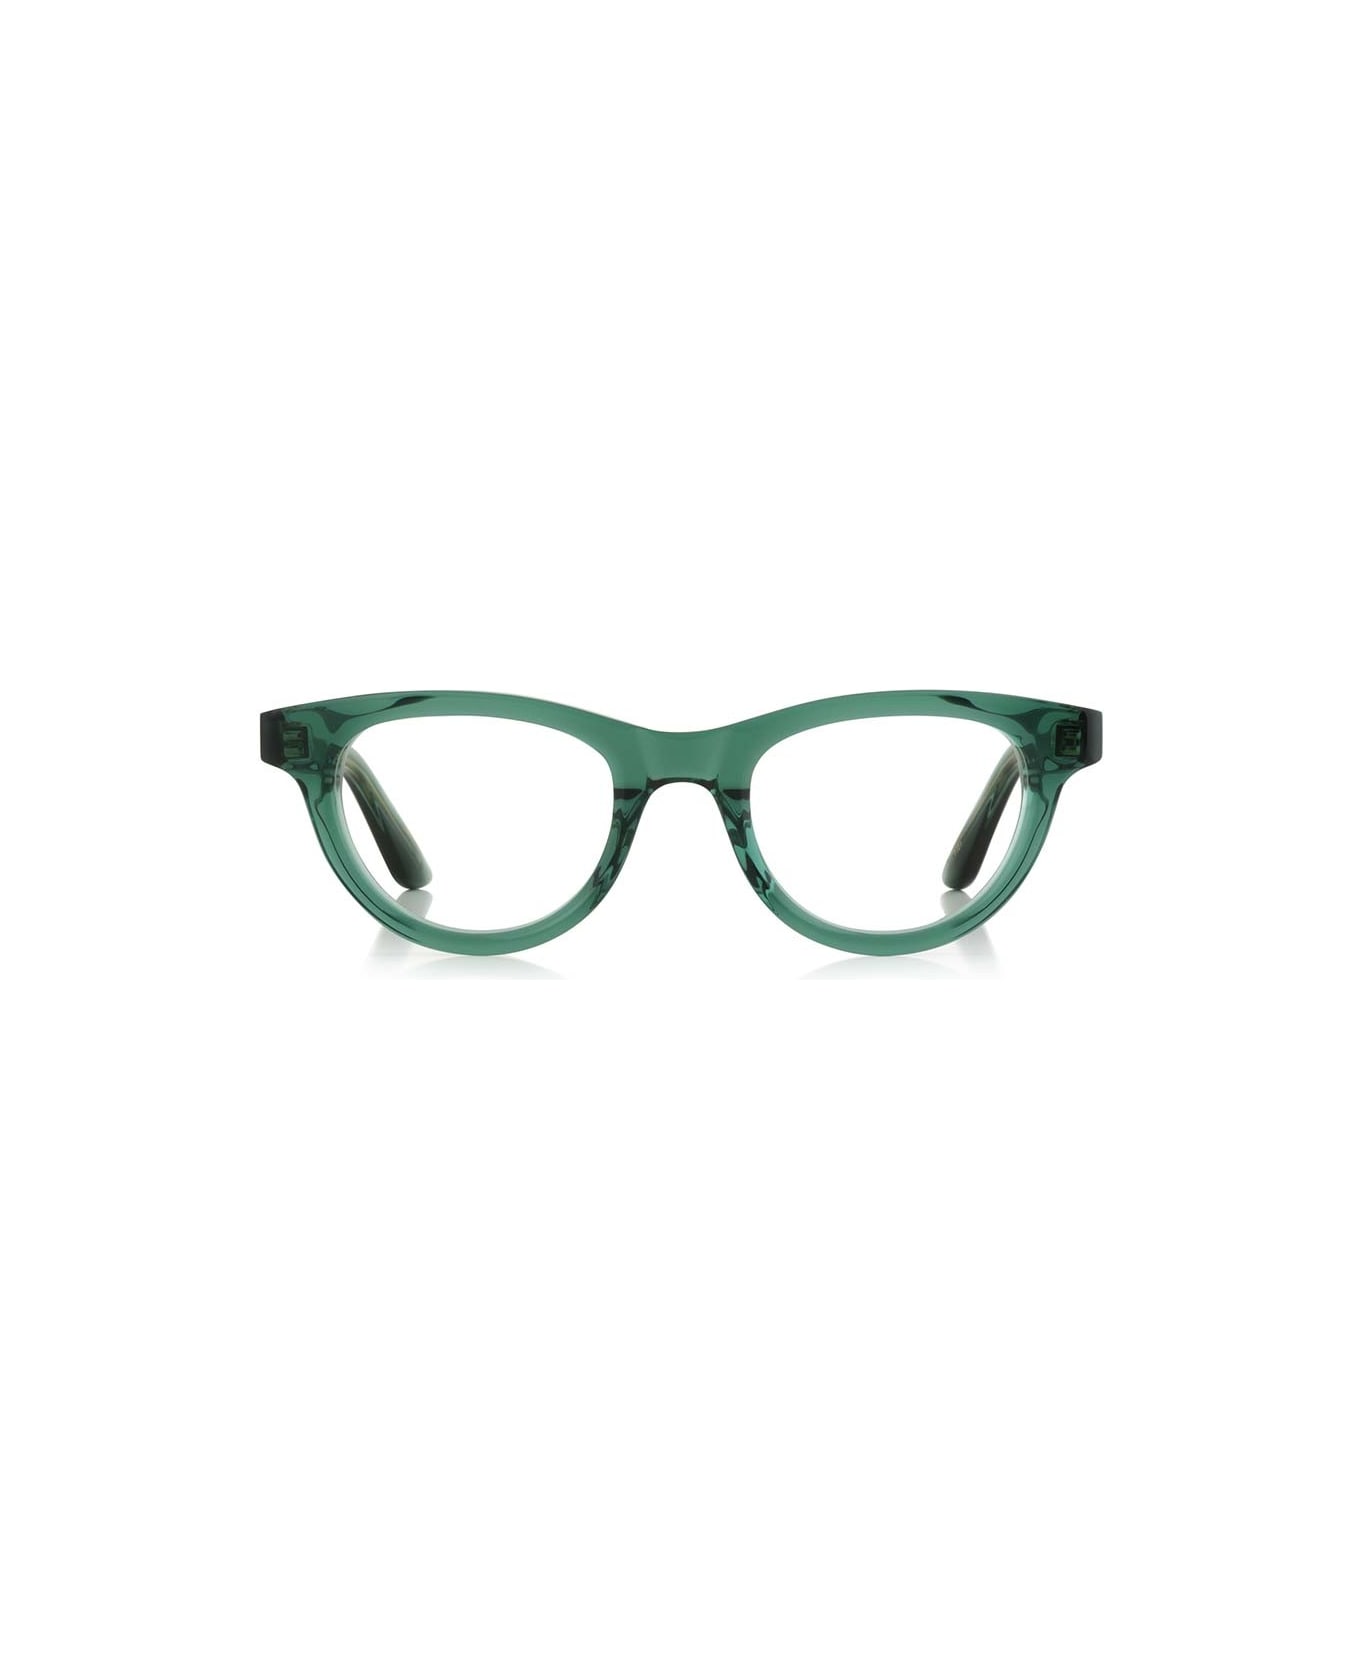 Robert La Roche Glasses - Verde